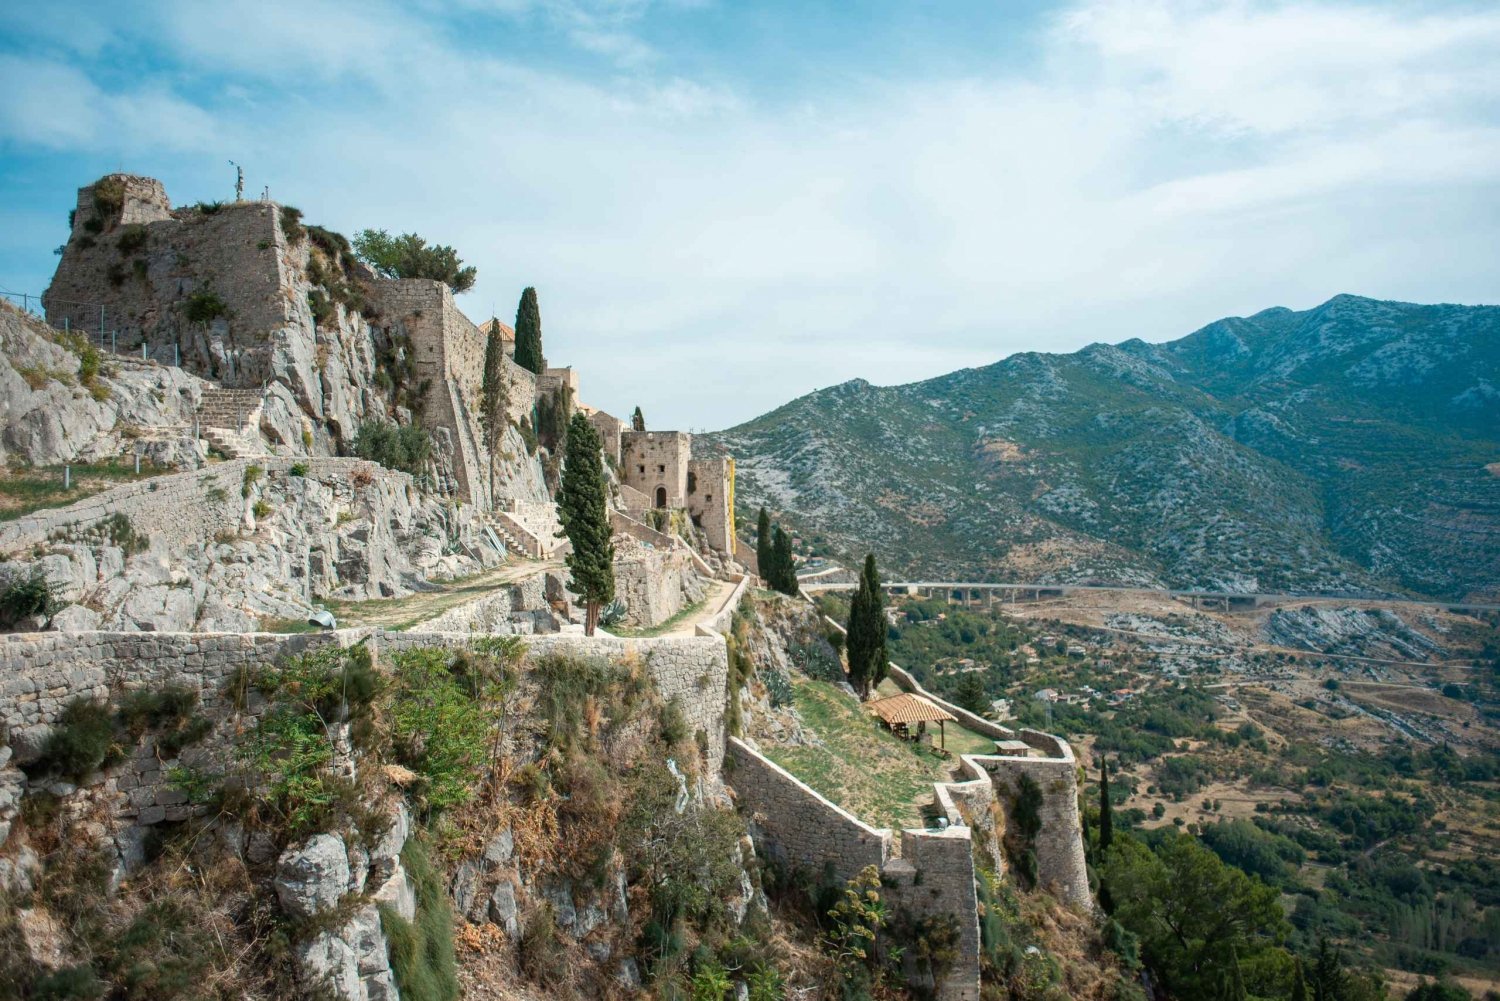 Split: Half-day tour to Klis Fortress and Vranjača cave